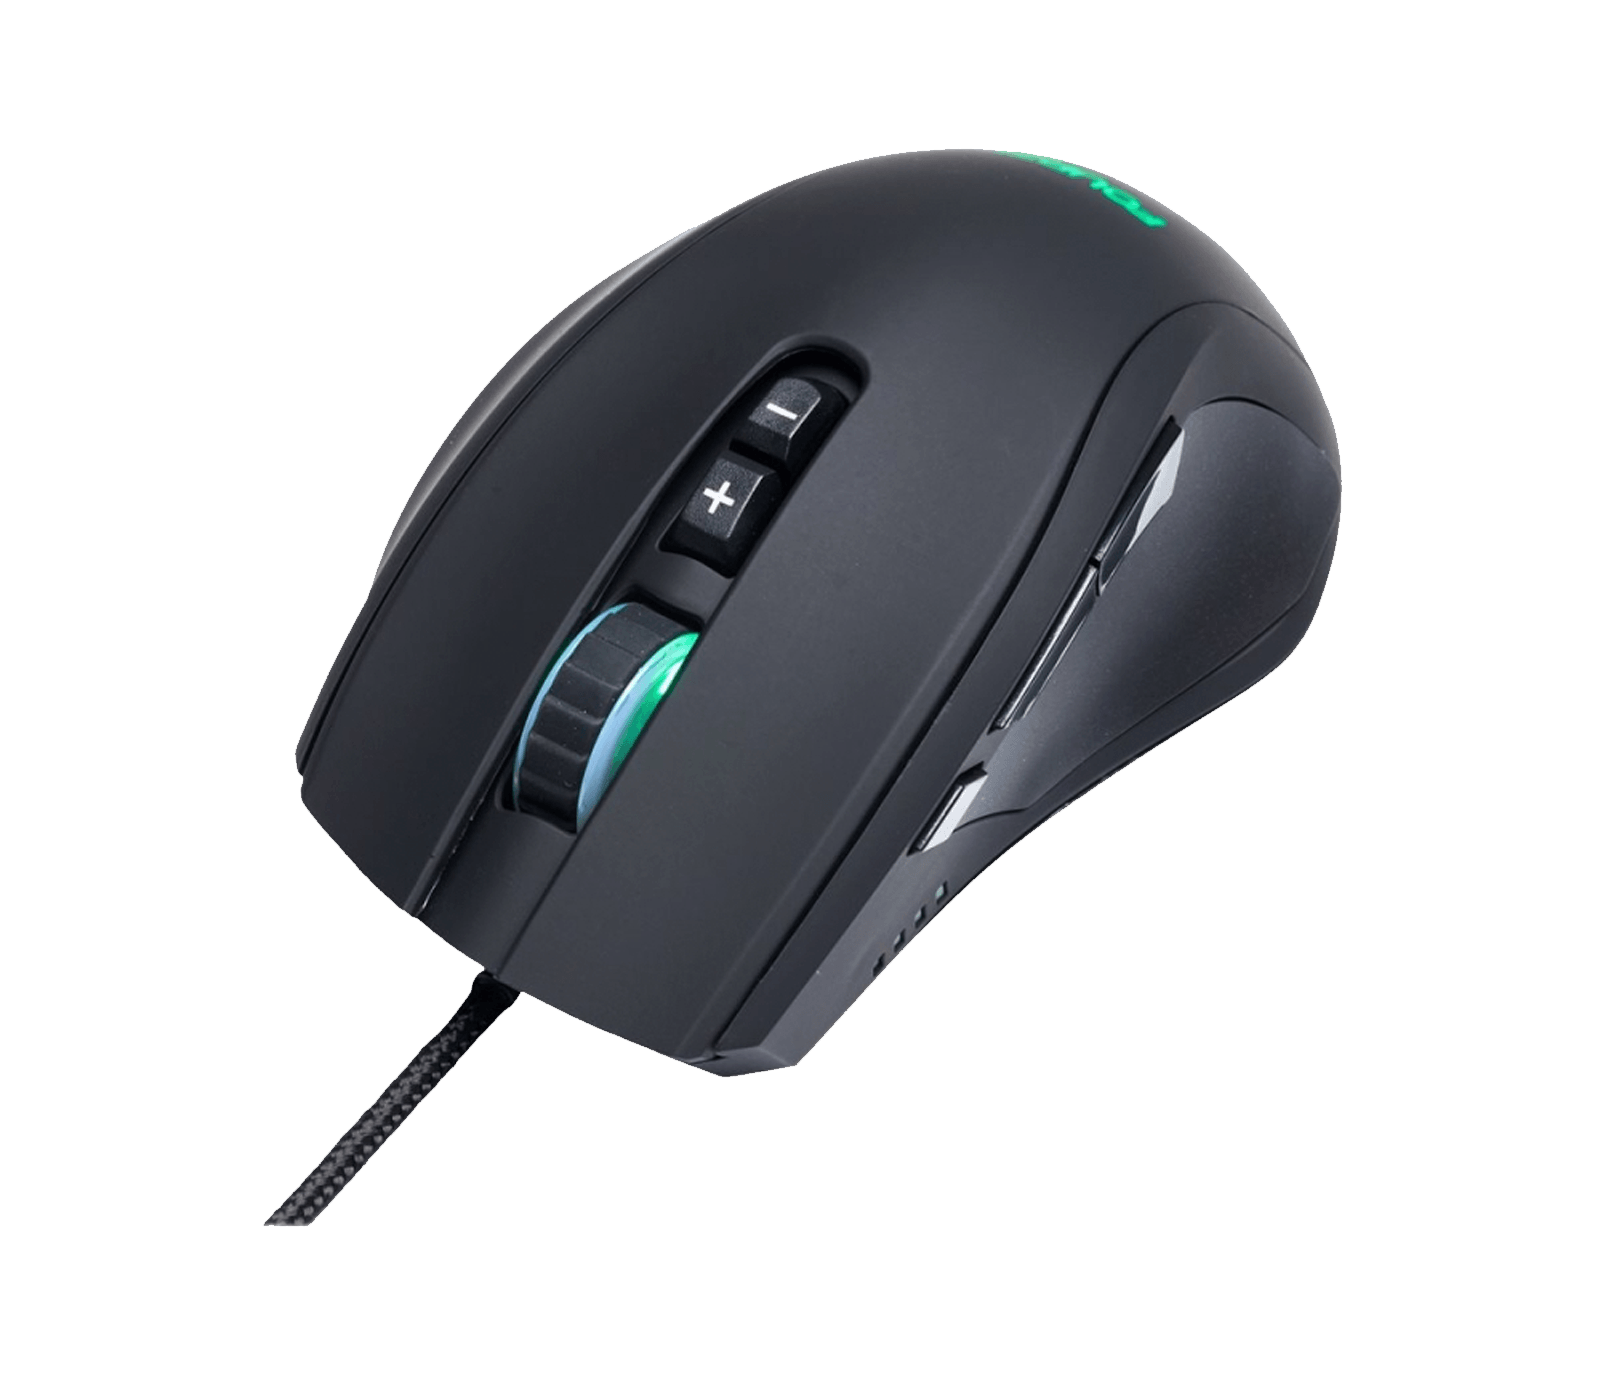 Fourze GM110 Gaming Mouse, 6000 Dpi - Kosmos Renew